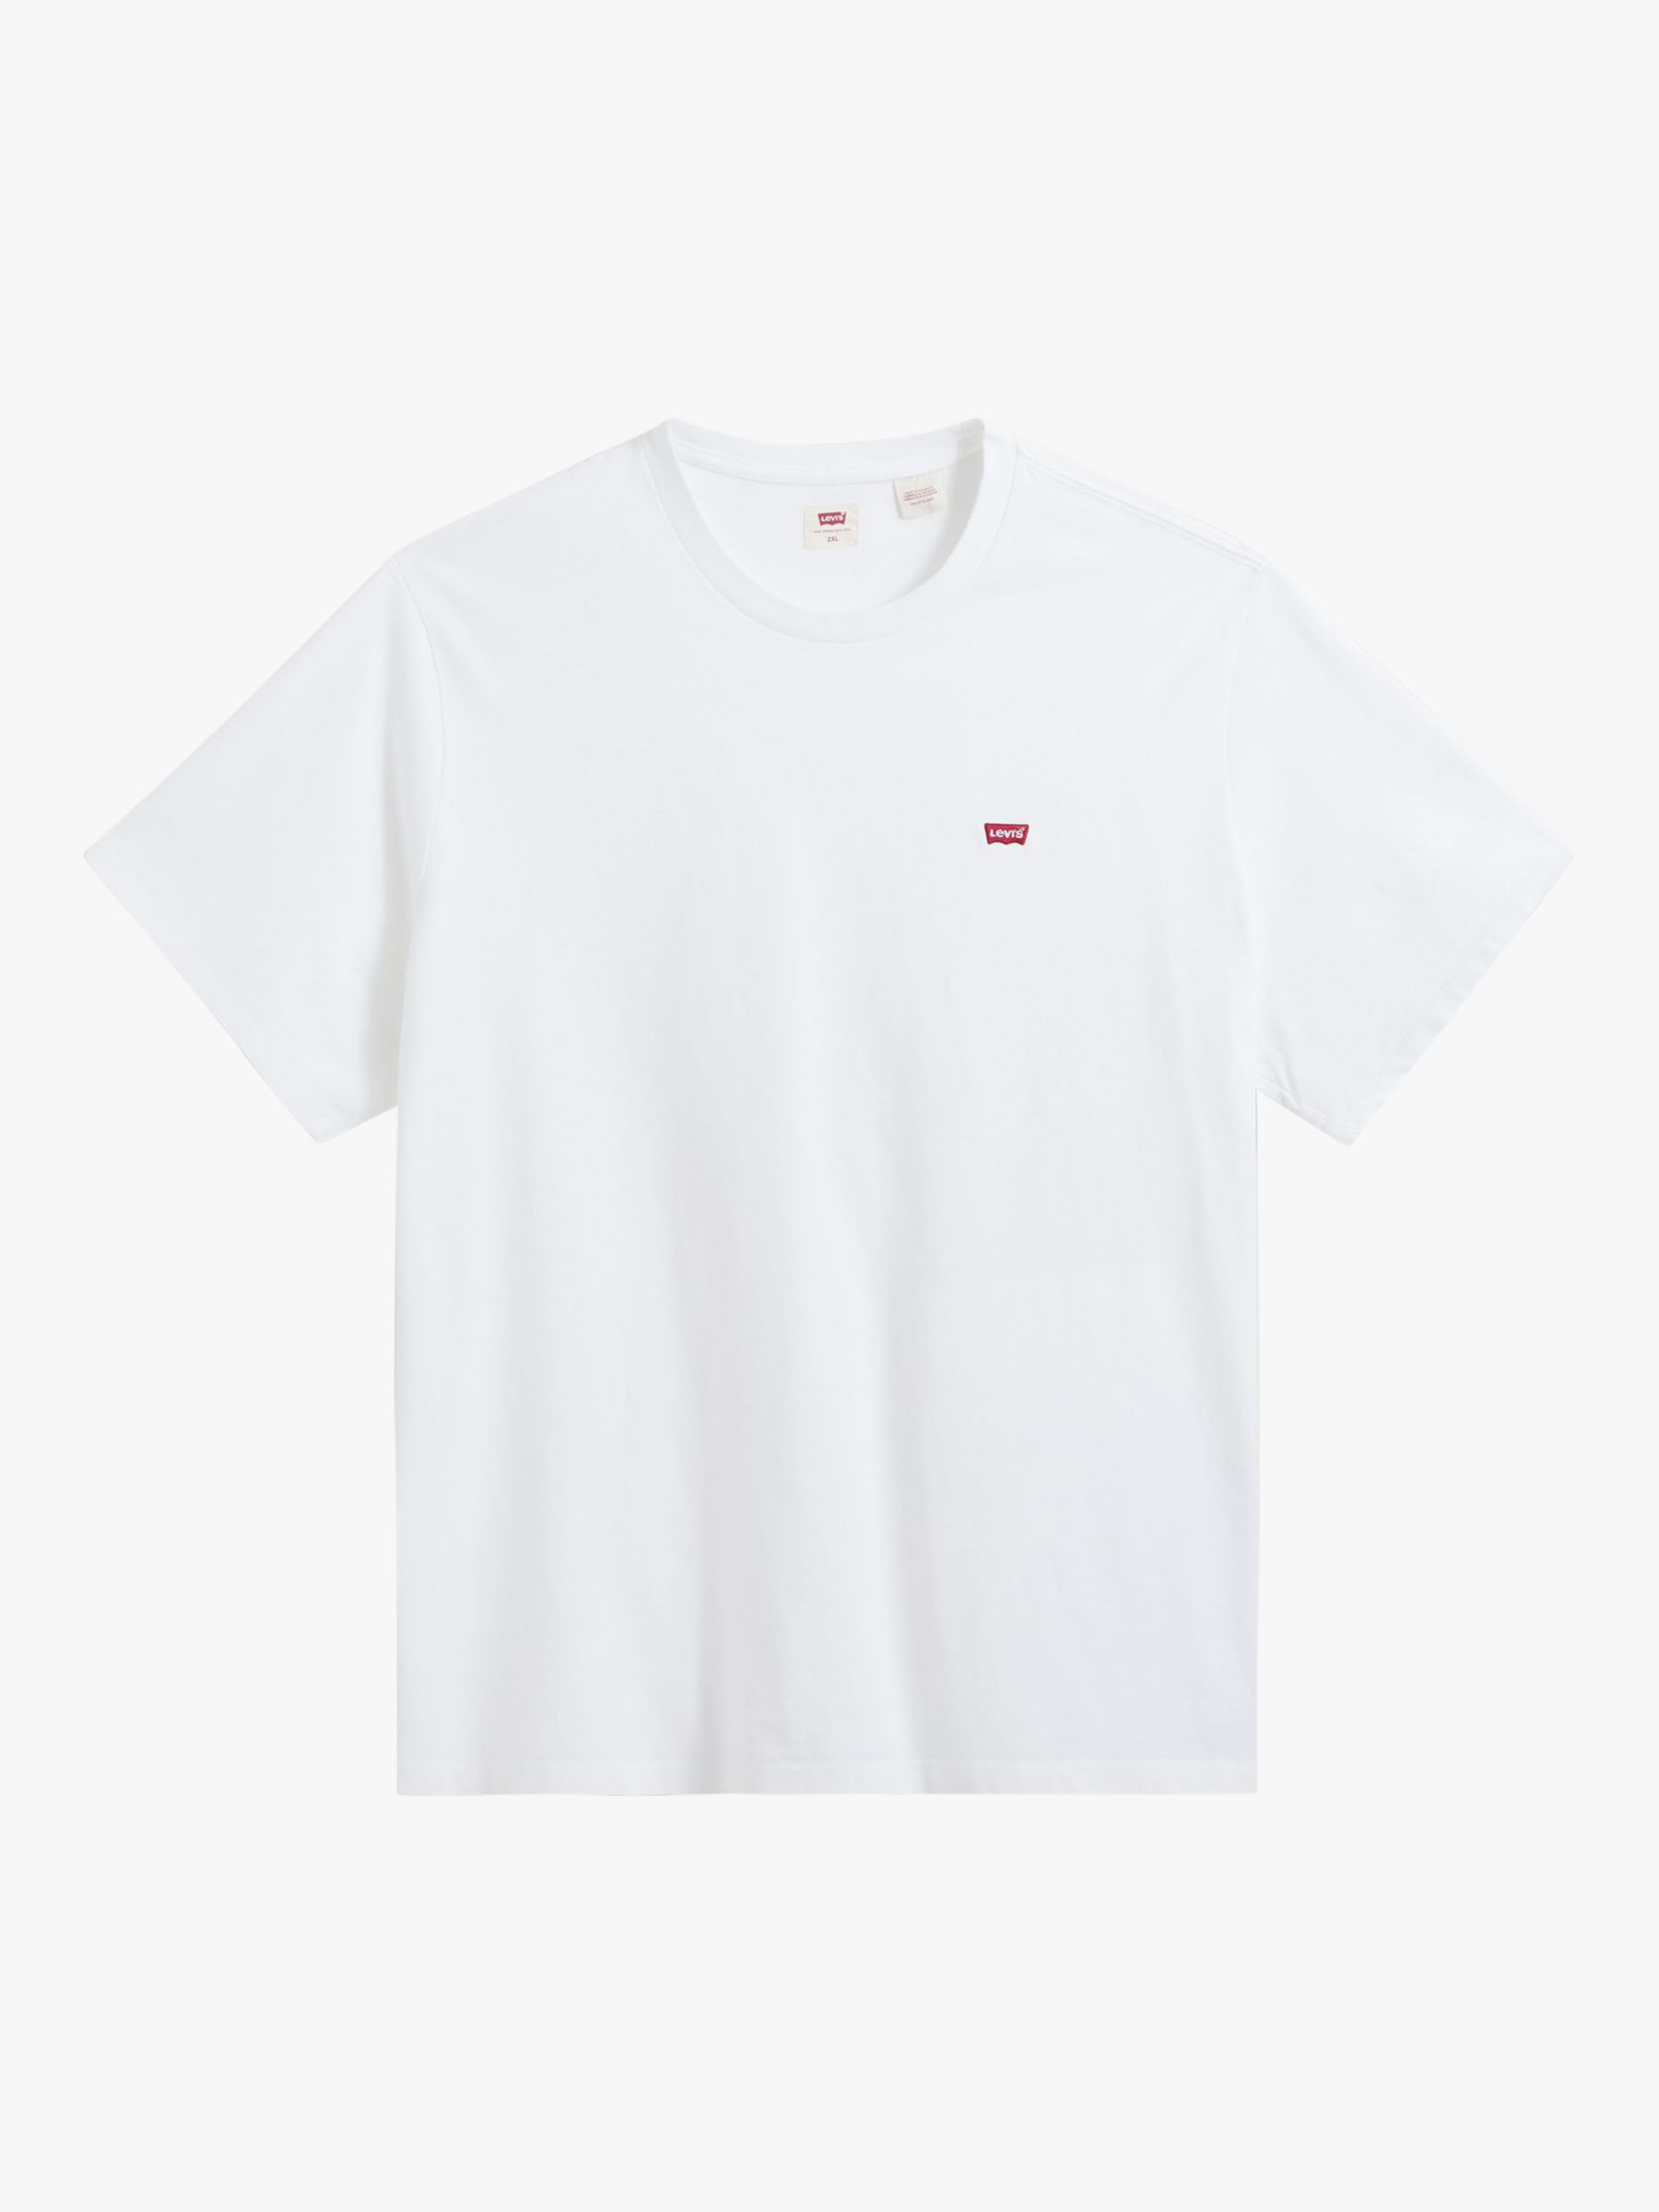 Levi's Big & Tall Original T-Shirt, White, 1XL